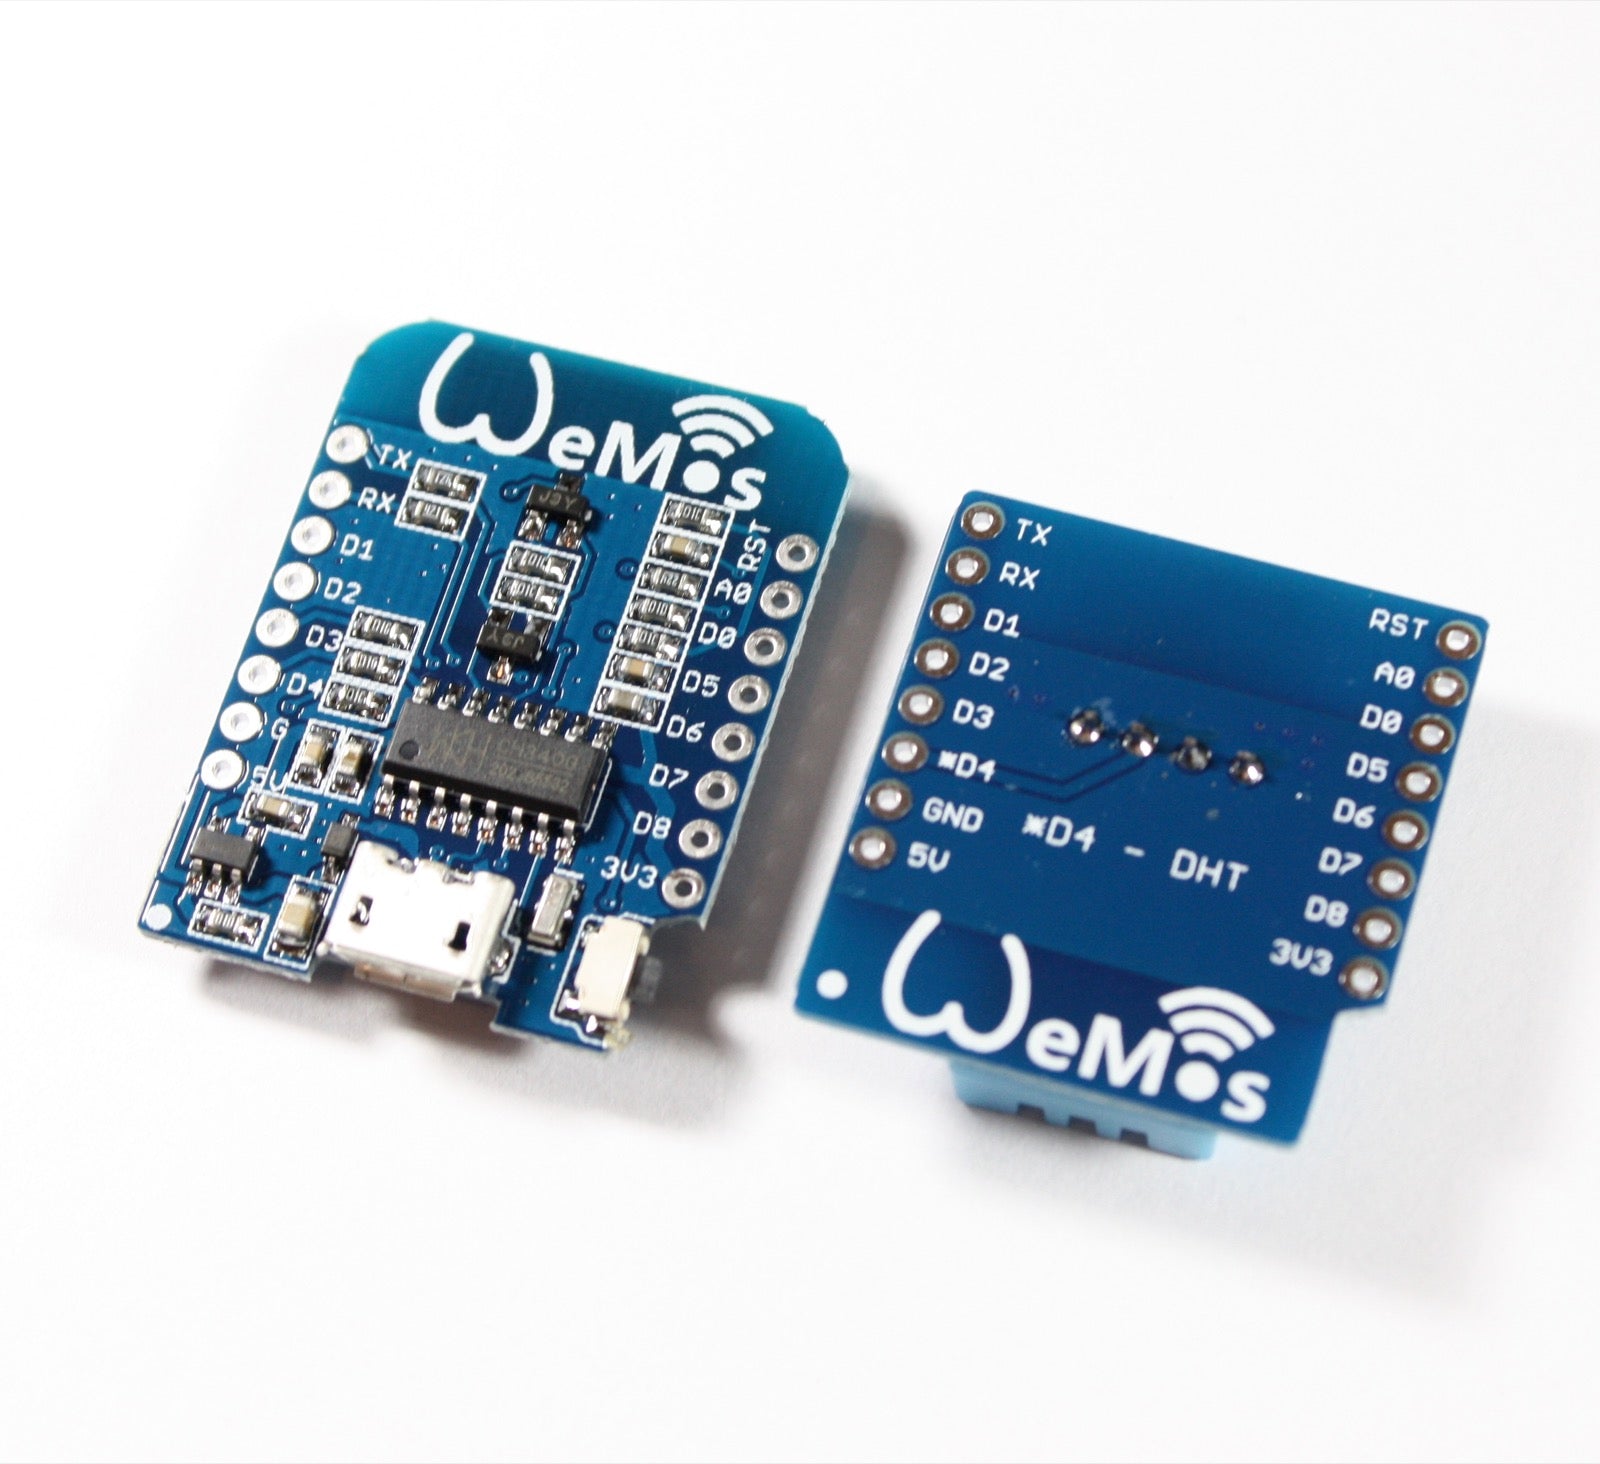 Wemos D1 Mini, a great development board with ESP8266